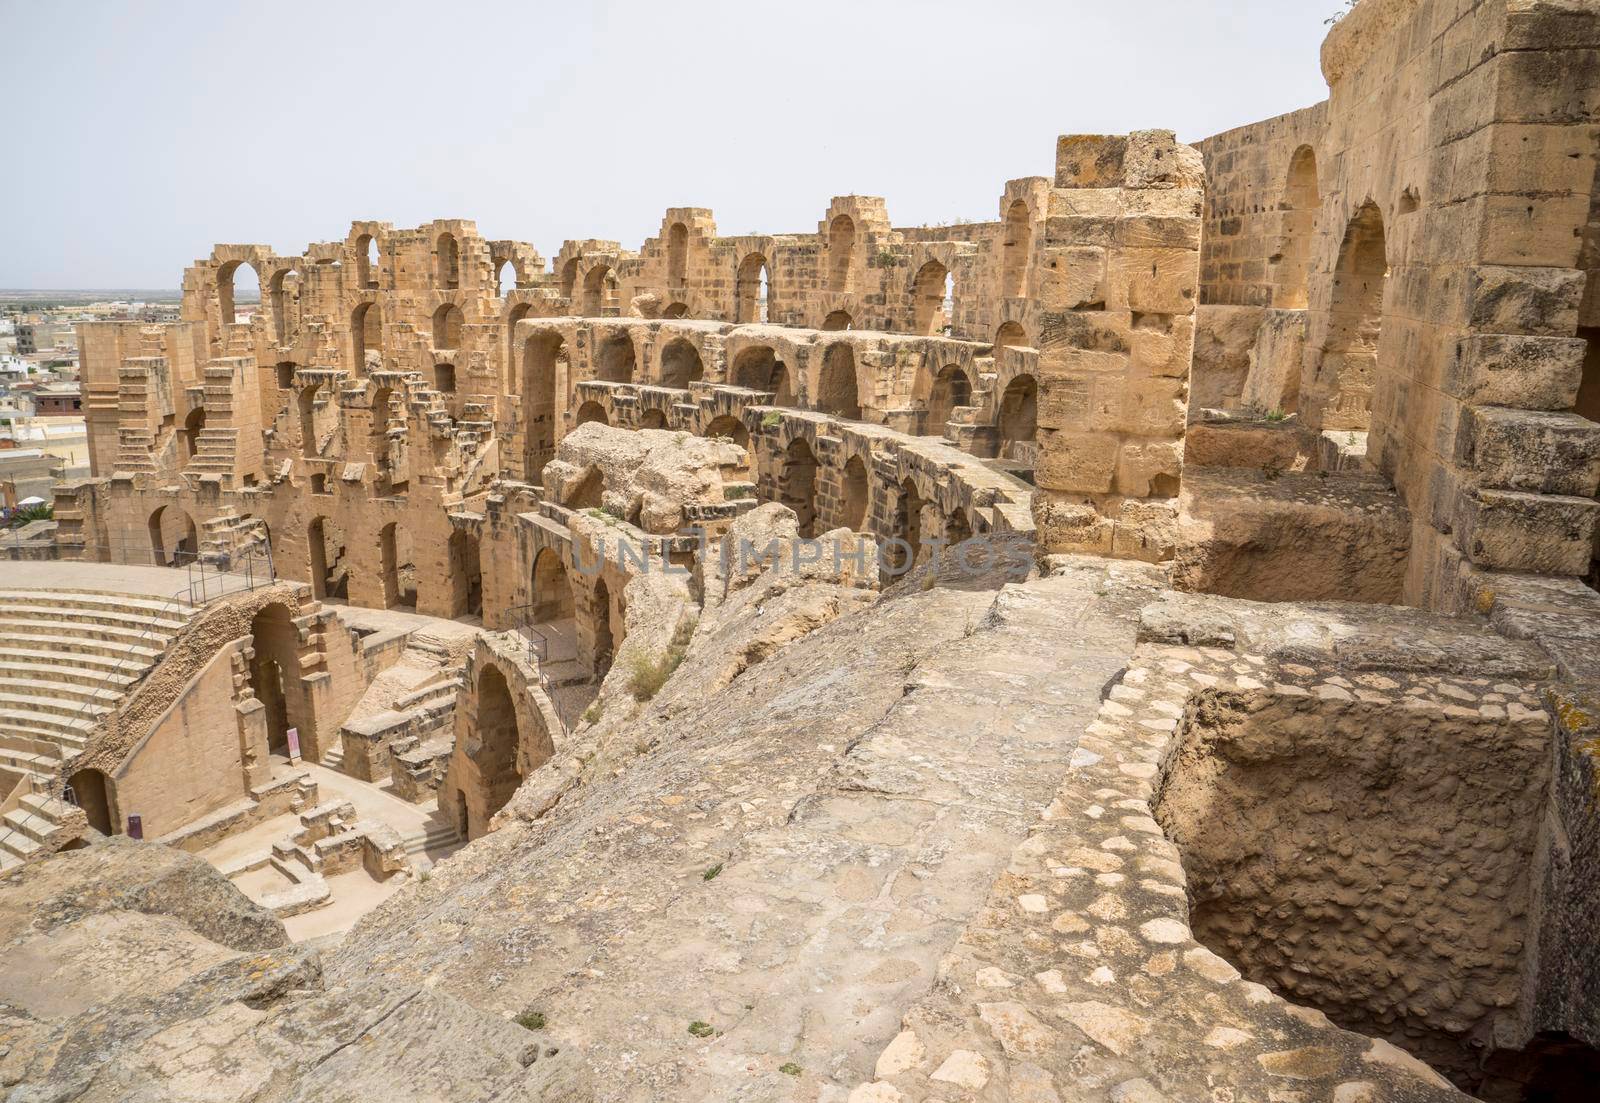 Remains of Roman amphitheater in El Djem in Tunisia, Africa